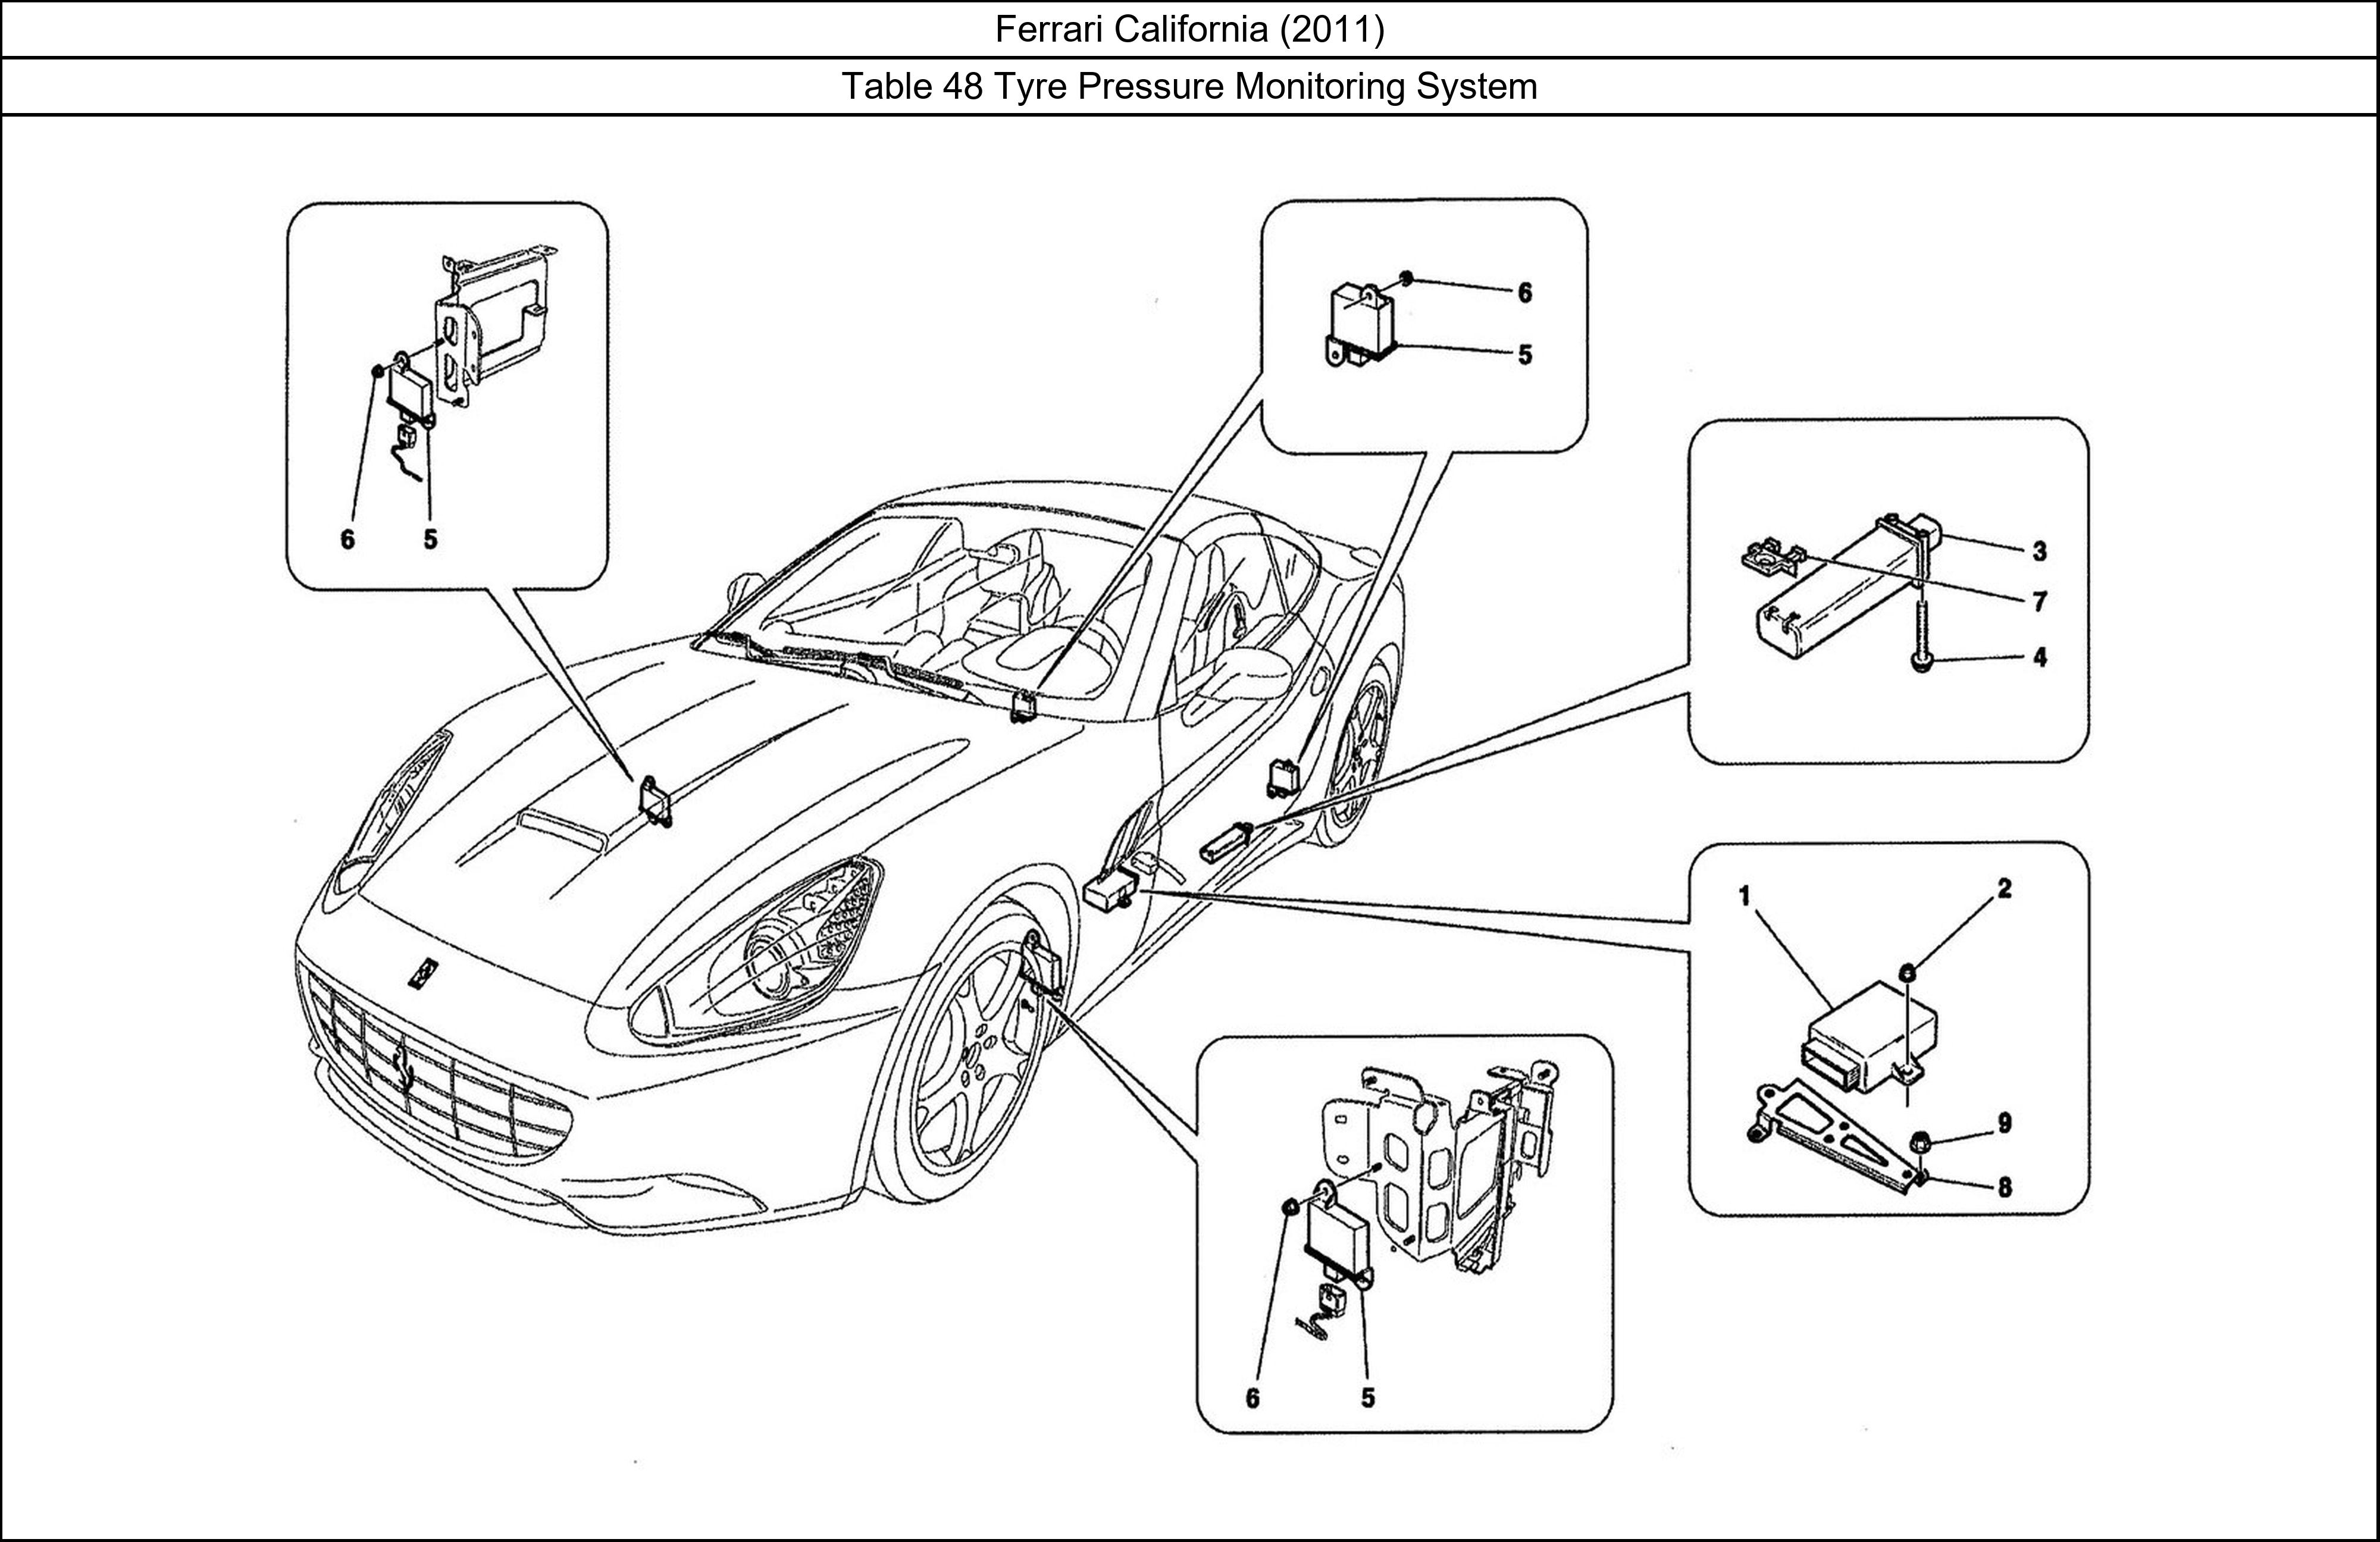 Ferrari Parts Ferrari California (2011) Table 48 Tyre Pressure Monitoring System